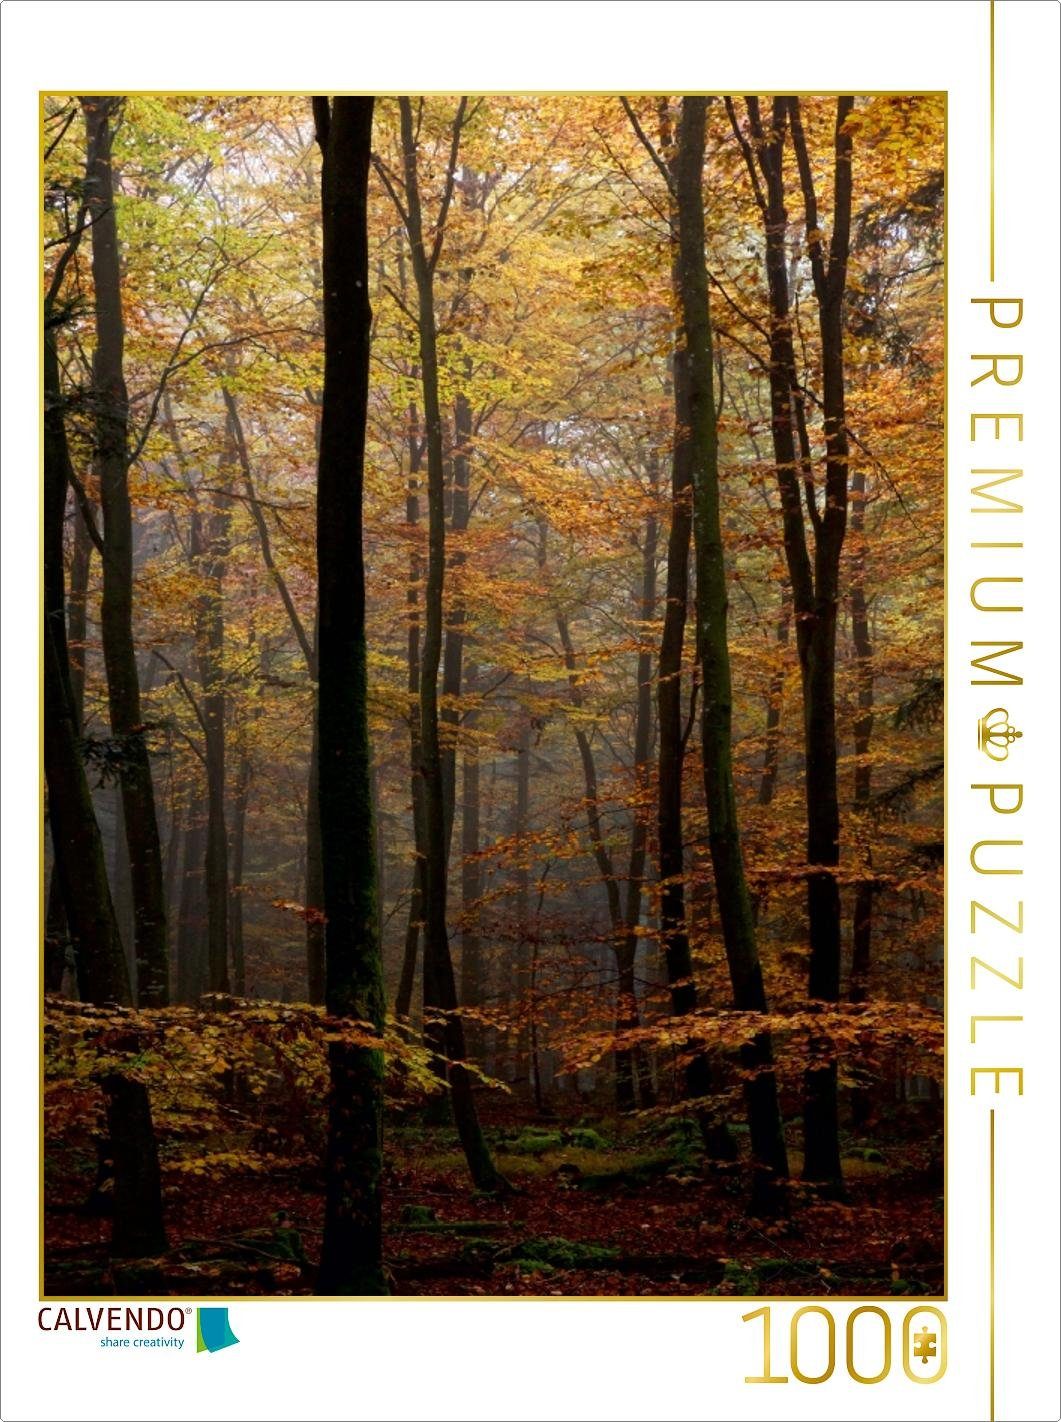 CALVENDO Puzzle CALVENDO Puzzle Herbst im Wald 1000 Teile Lege-Größe 48 x 64 cm Foto-Puzzle Bild von Martina Cross, 1000 Puzzleteile